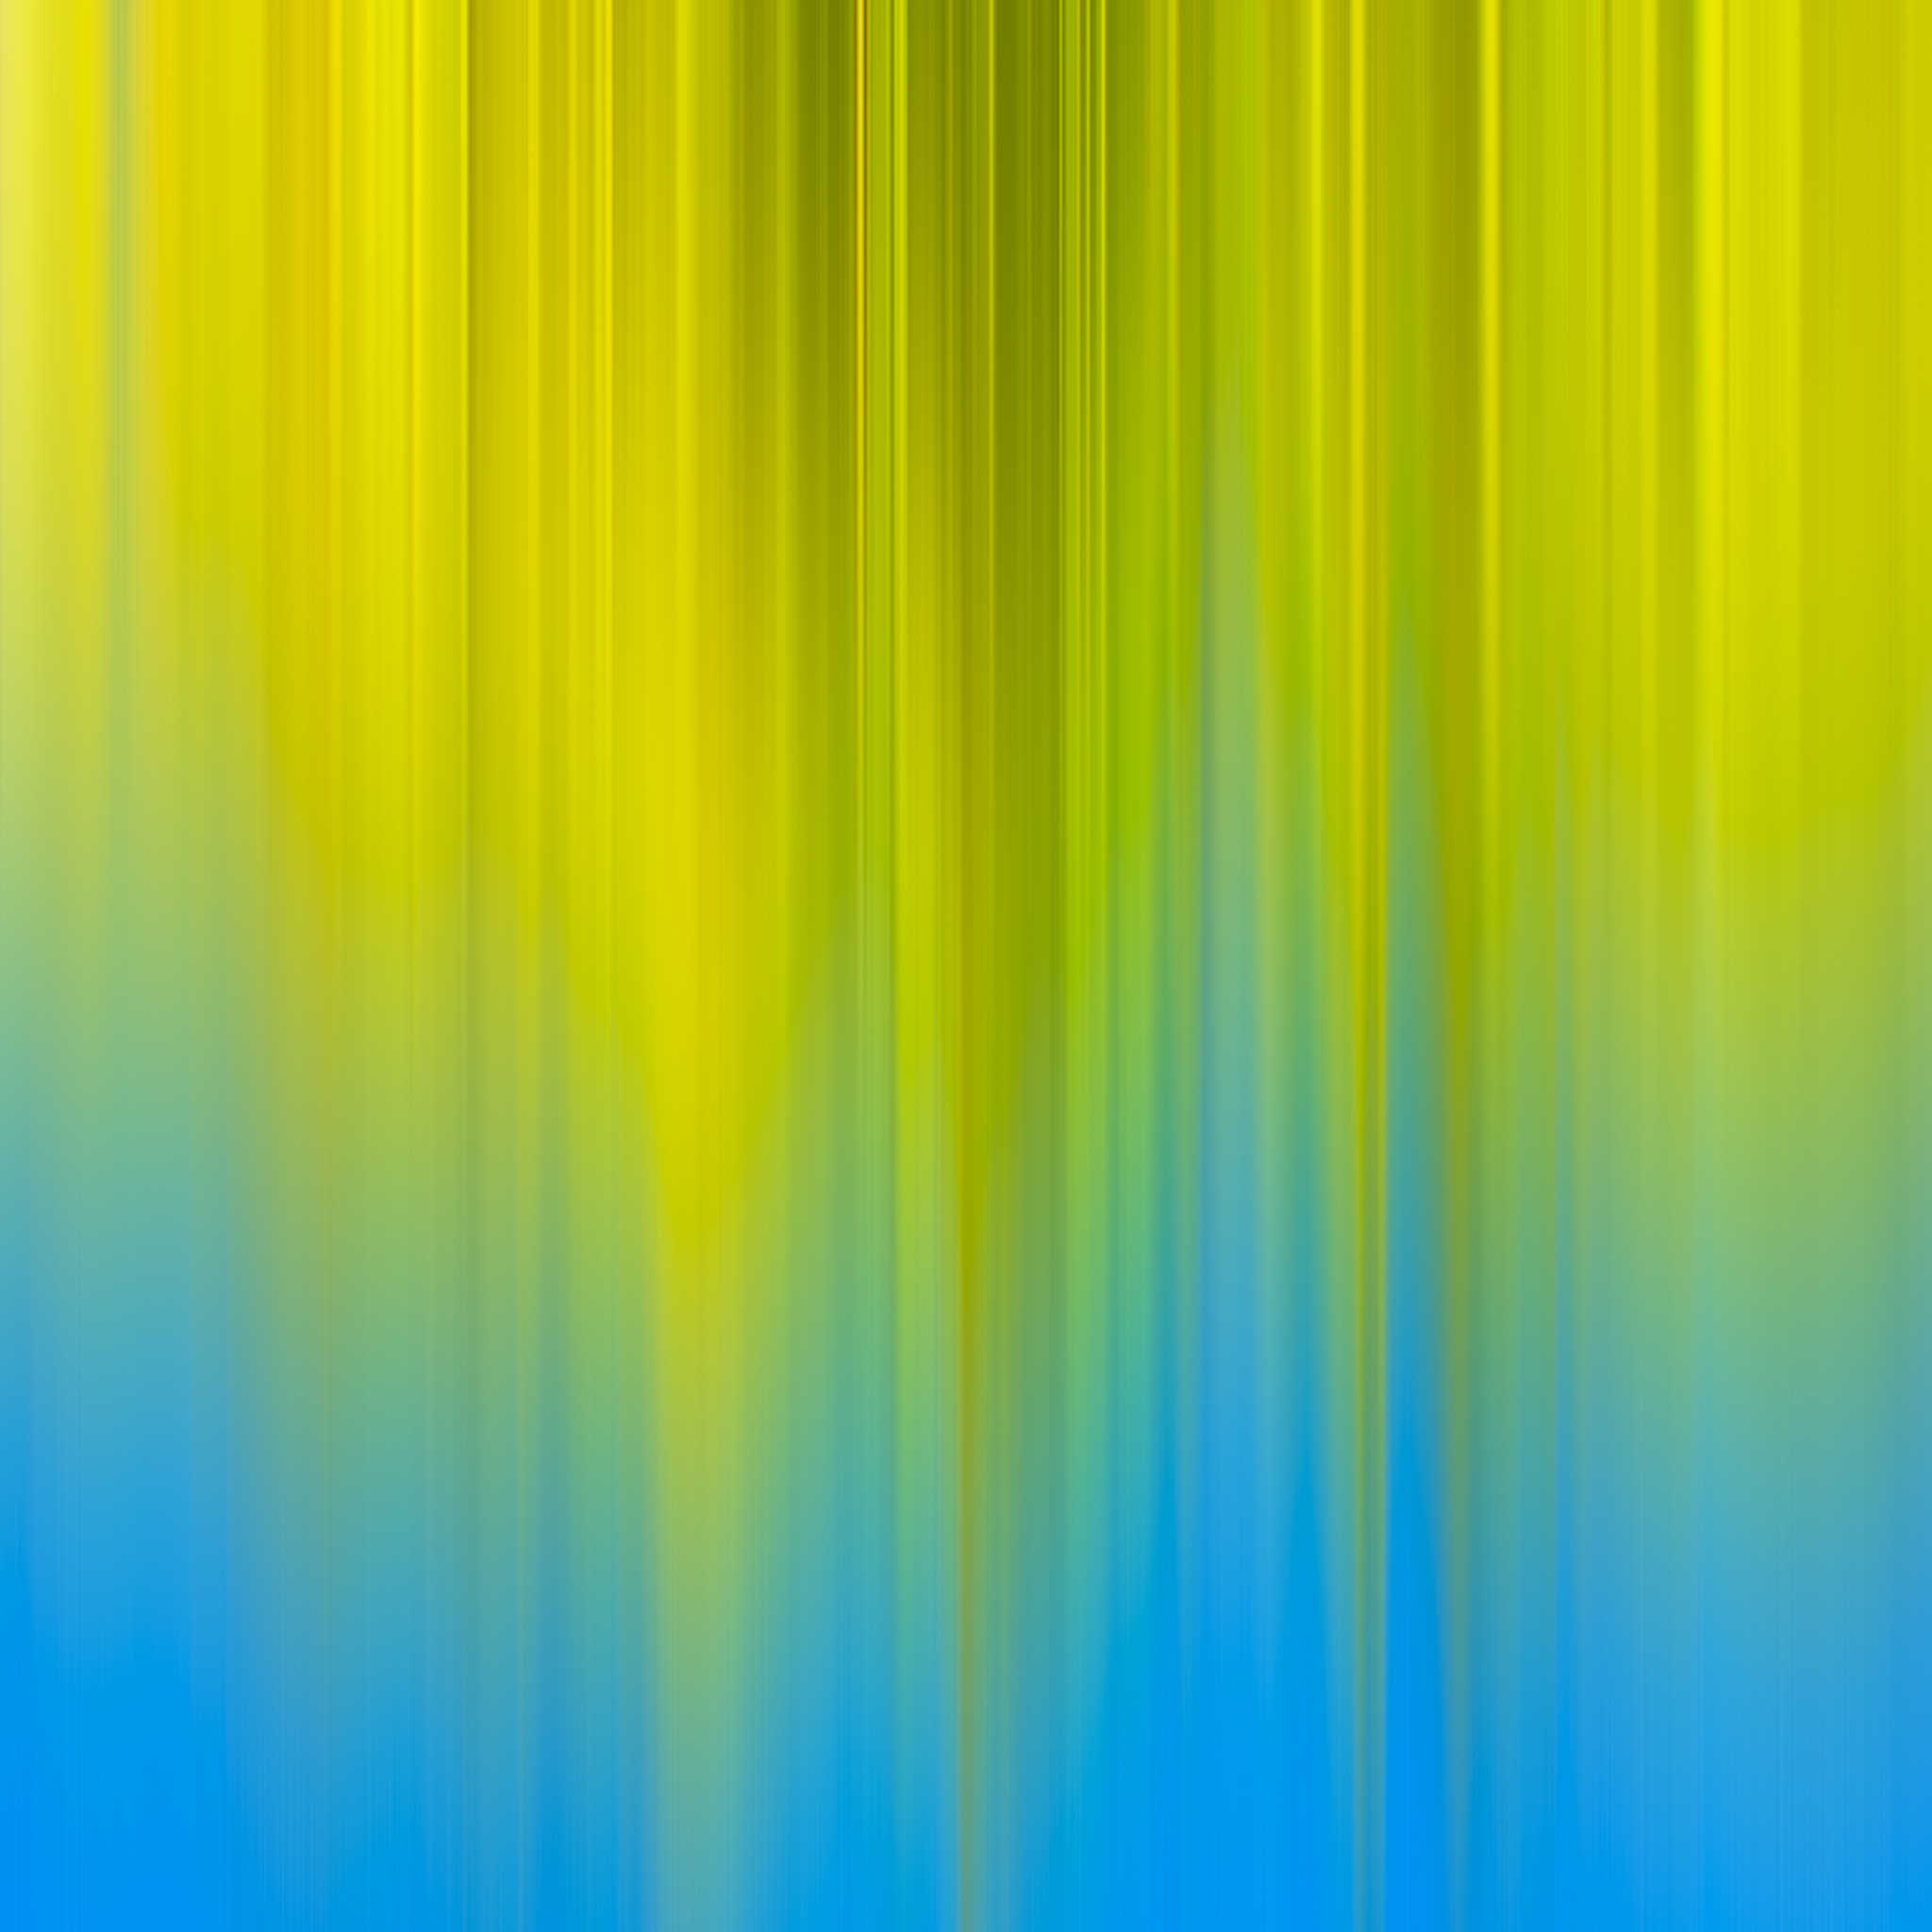 ipad wallpaper hd,blau,grün,gelb,türkis,linie